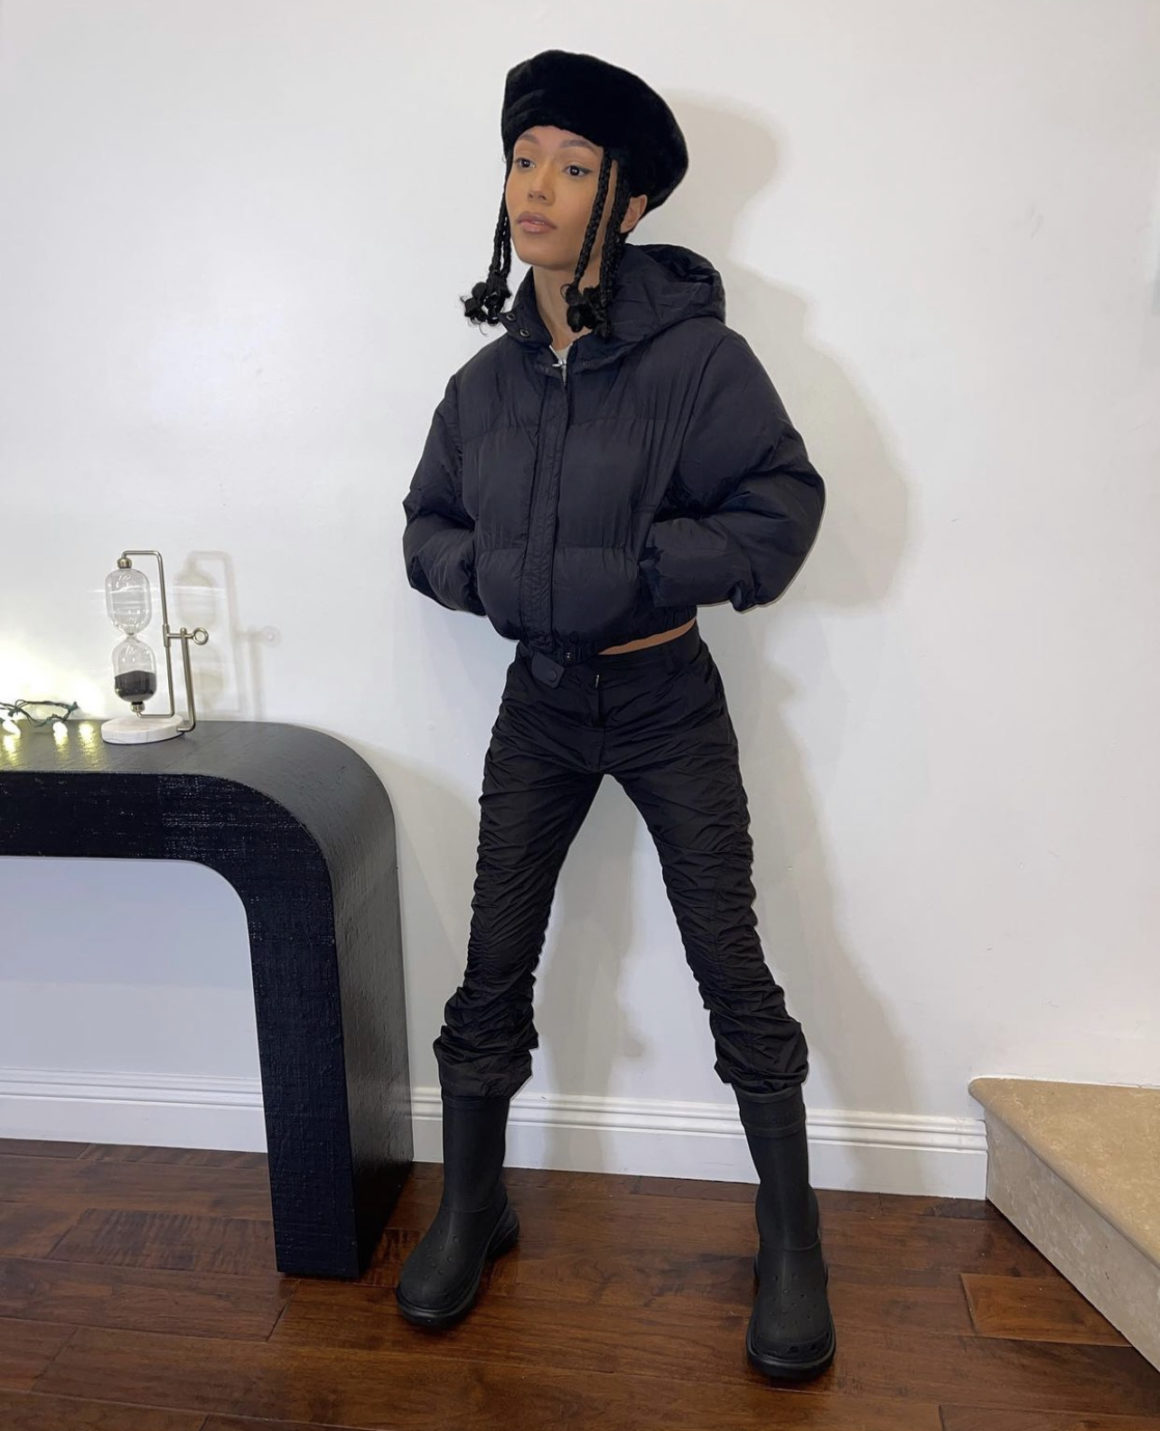 Coi Leray Rocks Black Outfit Featuring Fashion Nova Cropped Puffer Jacket3